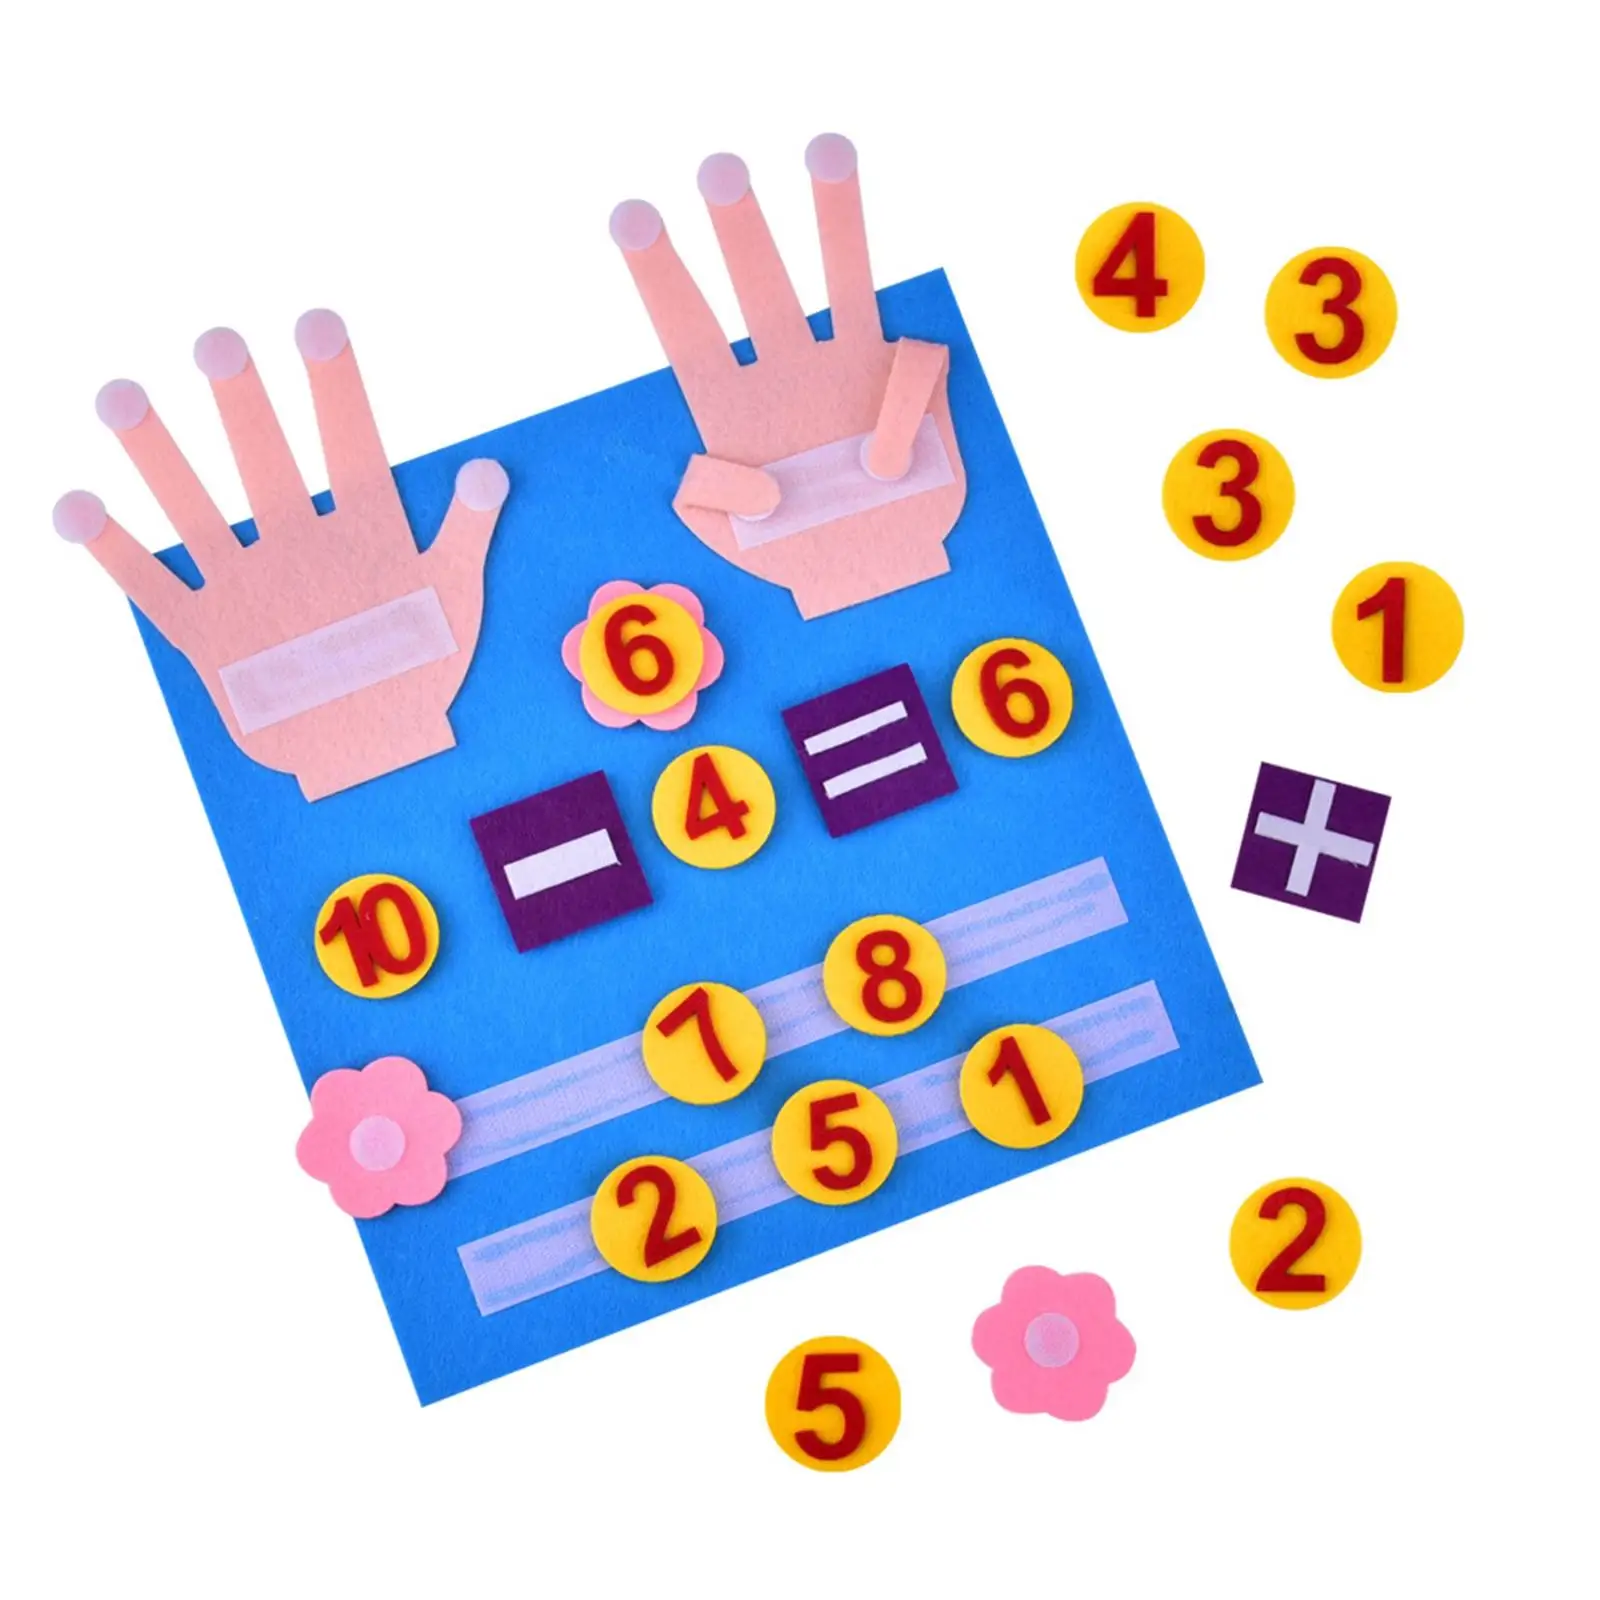 Finger Number Learning Activities Addition Subtraction Felt Math Toys Counting Game for Boys Girls Children Kindergarten Kids